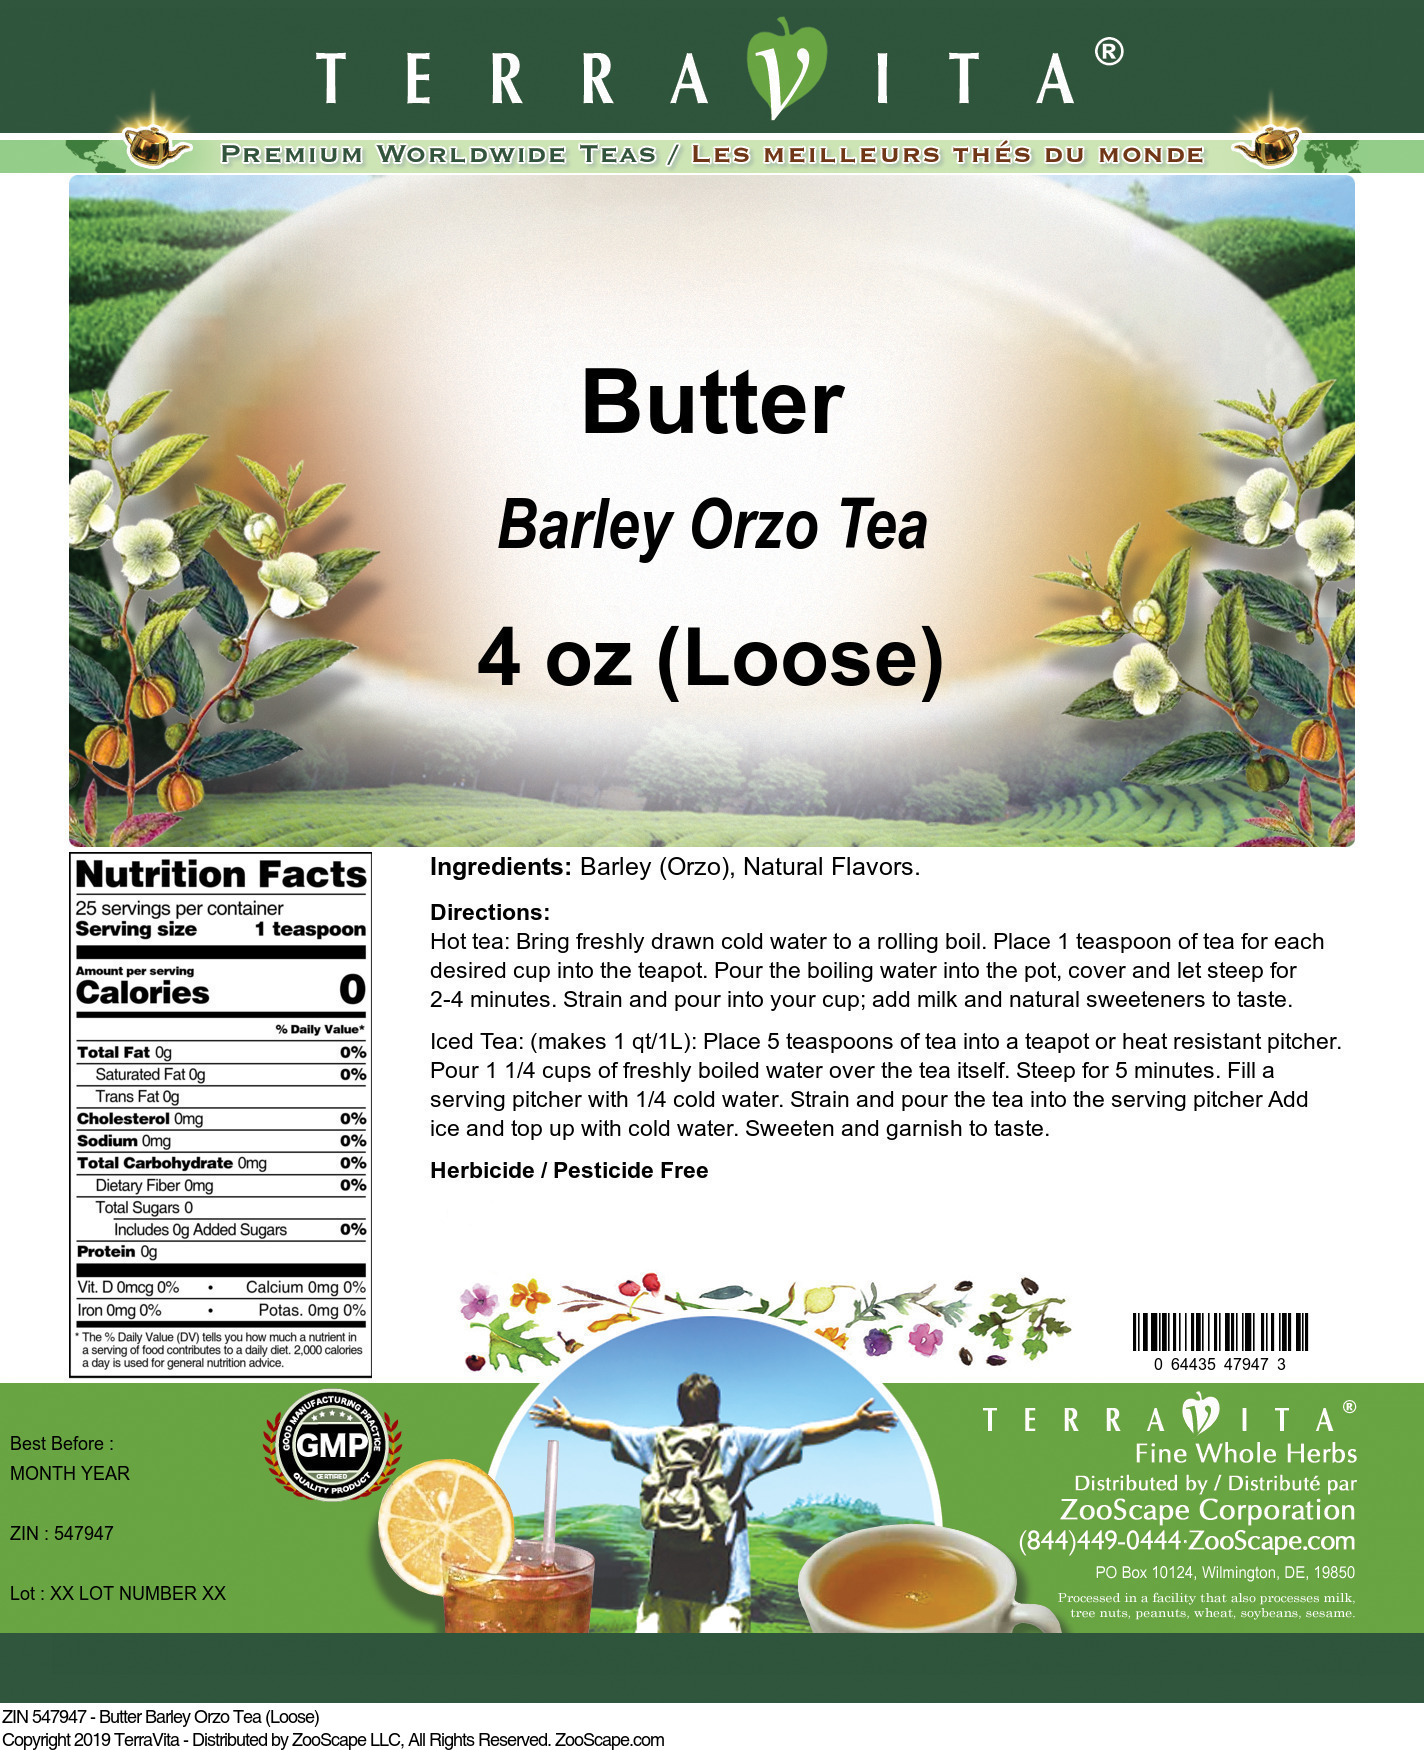 Butter Barley Orzo Tea (Loose) - Label